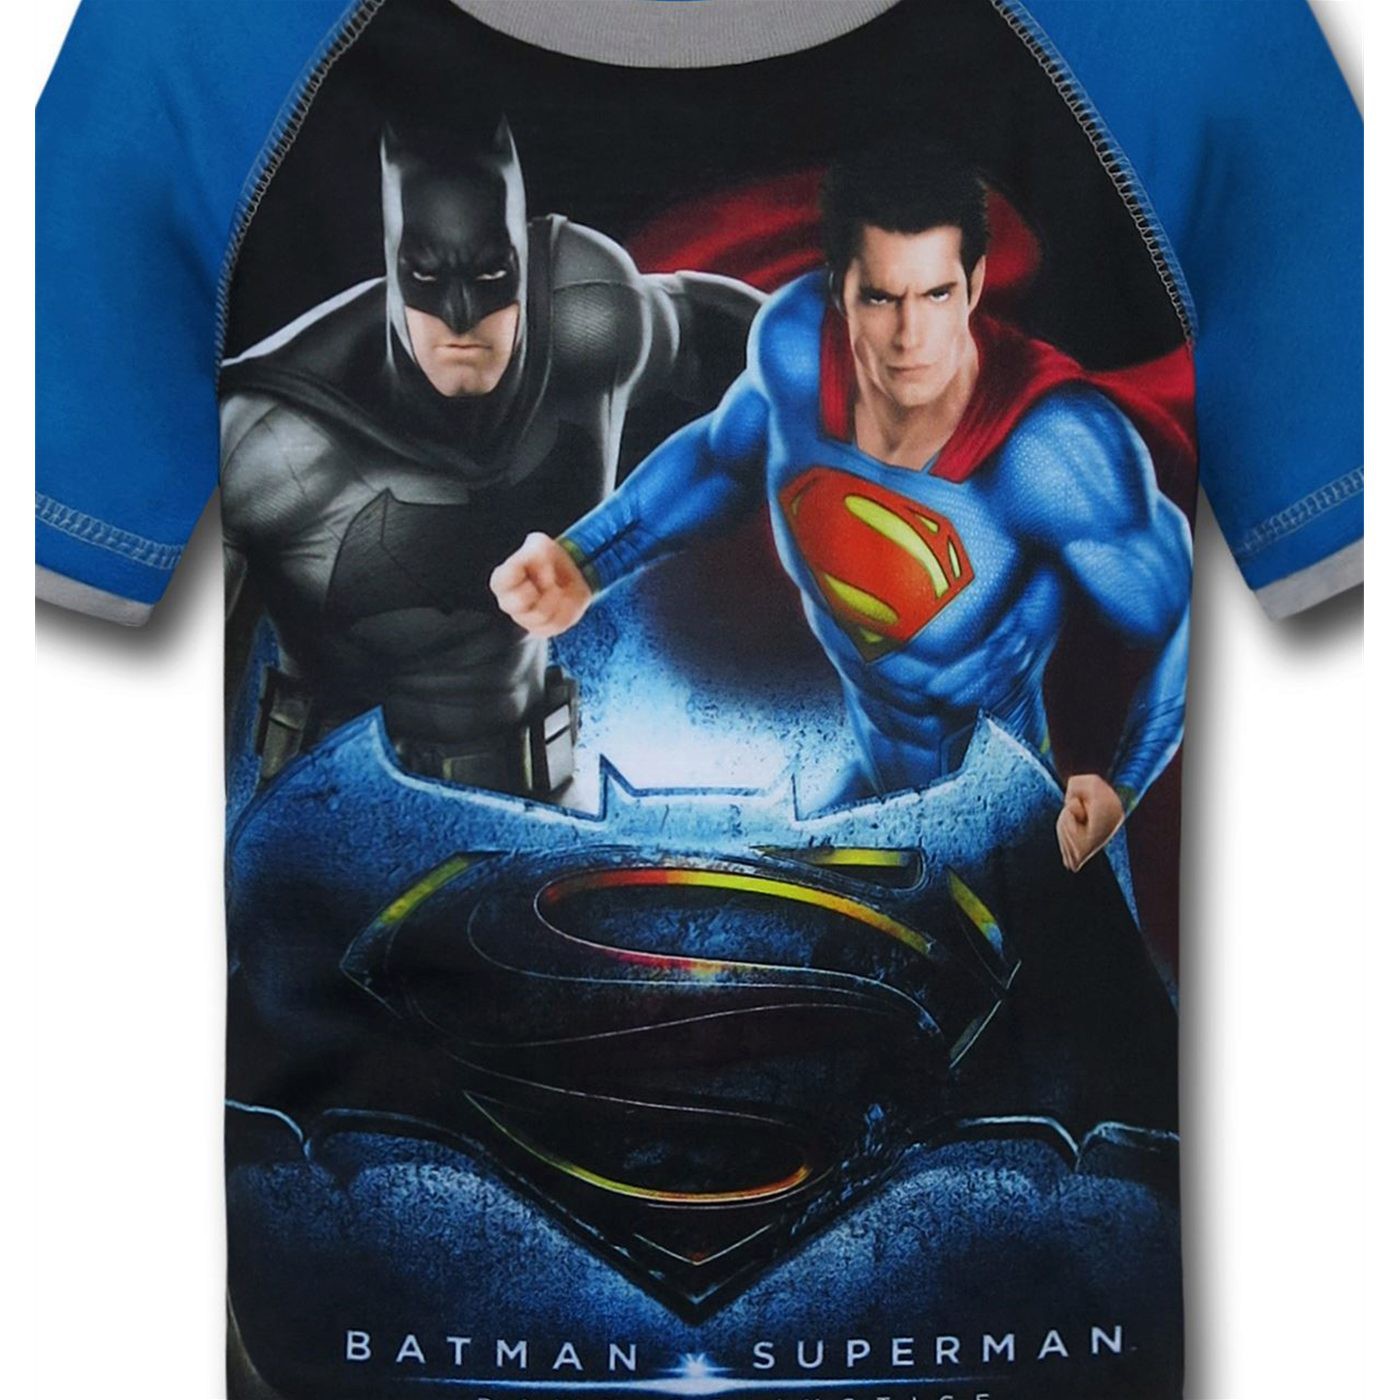 Batman Vs Superman Kids Black Pajama Set